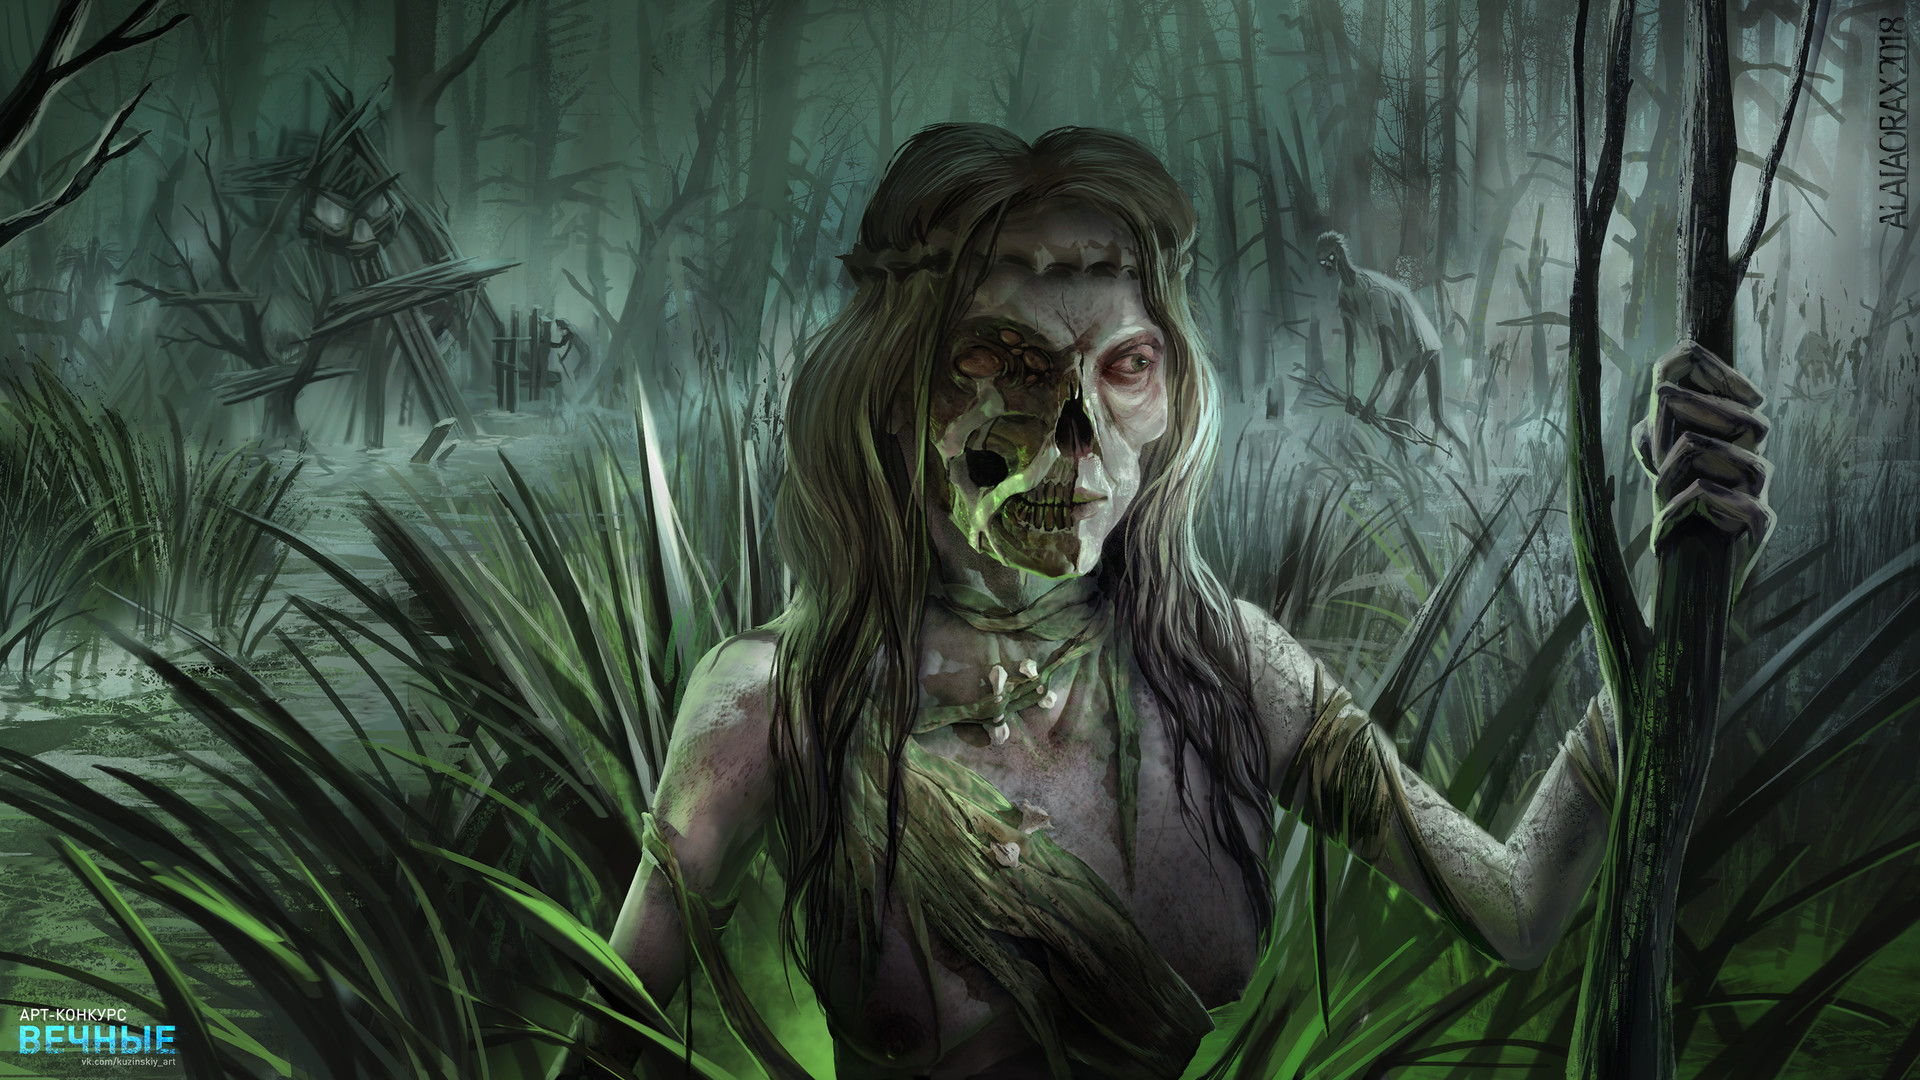 Swamp girl, Alaiaorax.